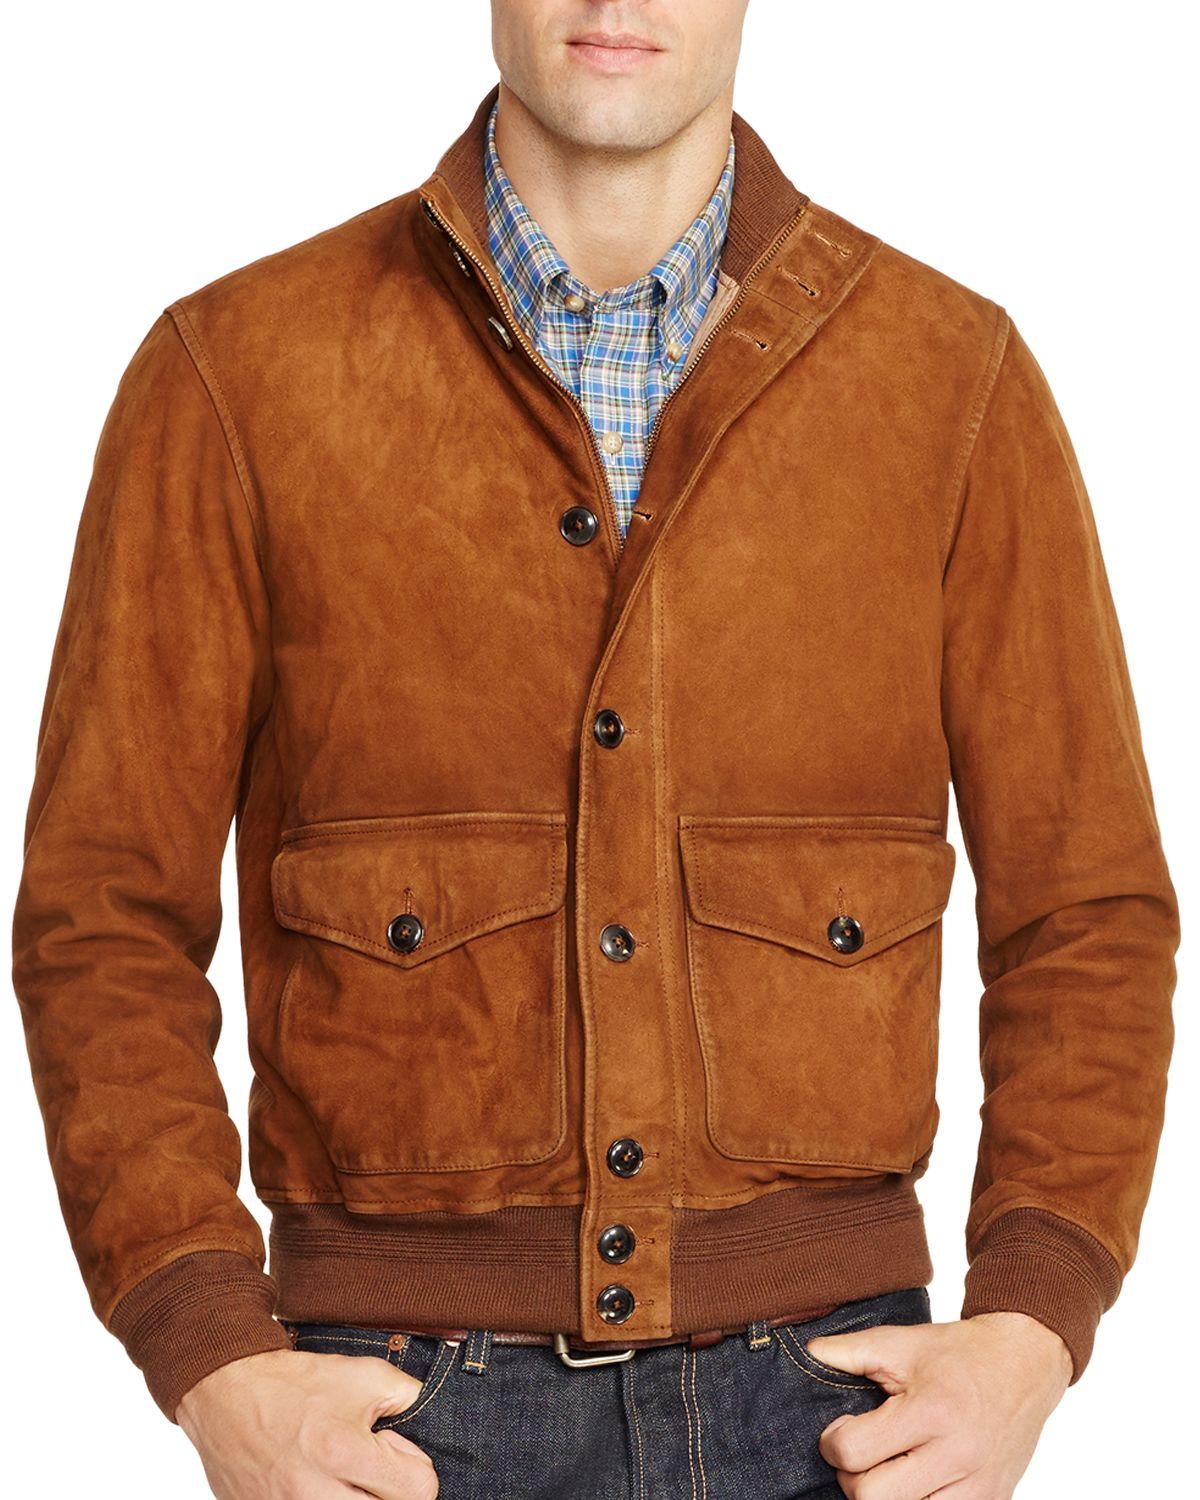 Polo Ralph Lauren Suede Hunting Jacket in Brown for Men - Lyst